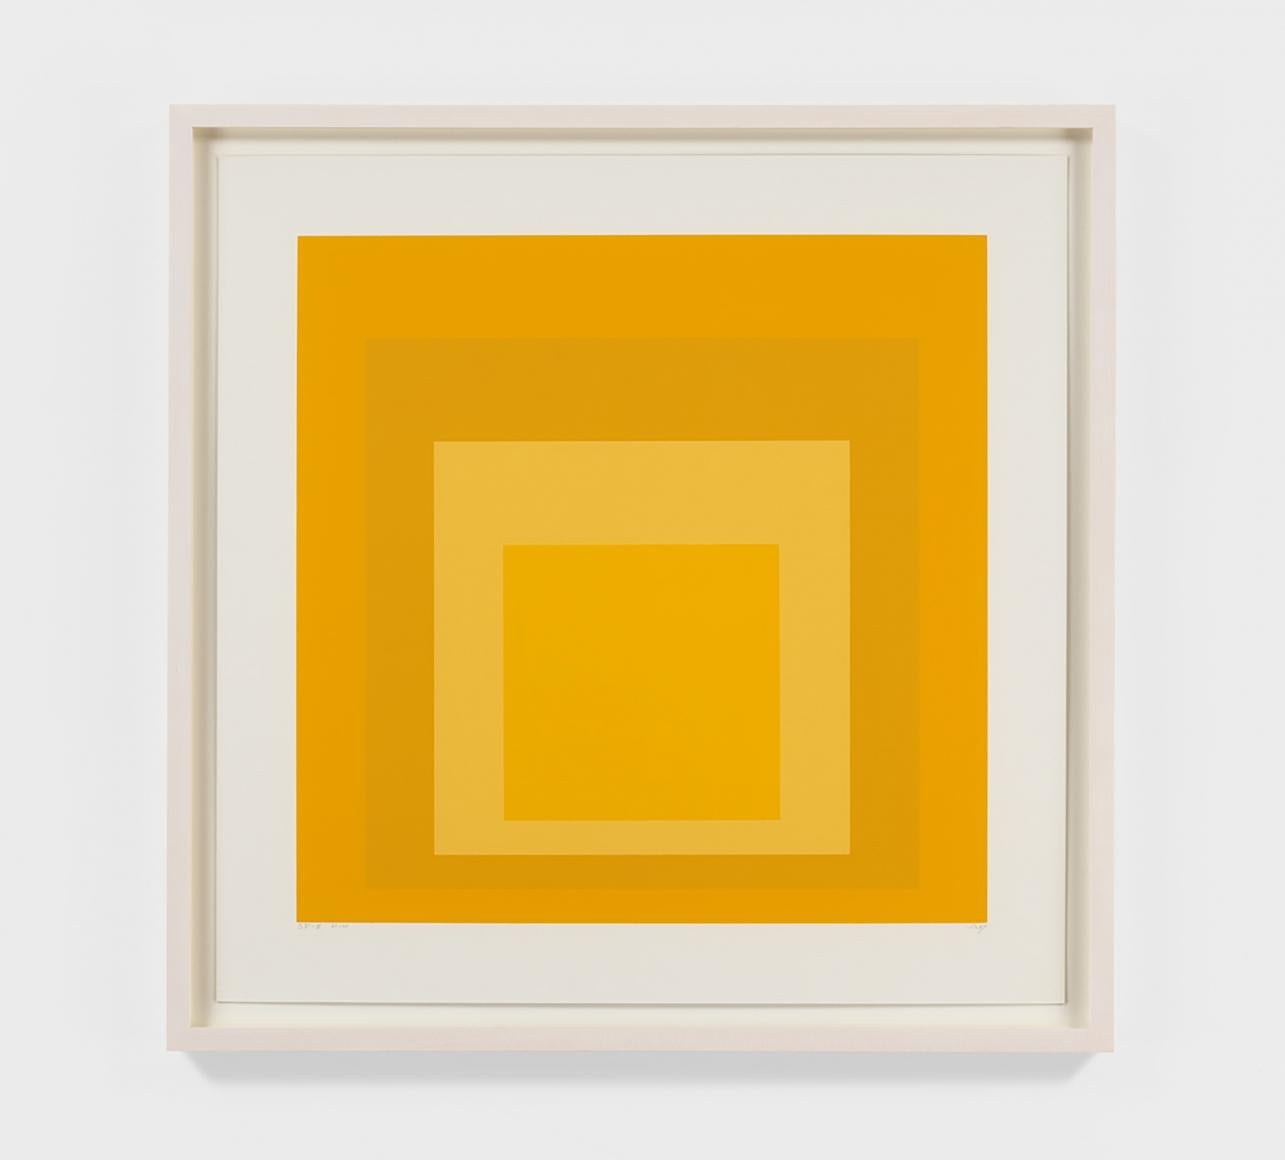 SP X - Abstract Geometric Print by Josef Albers